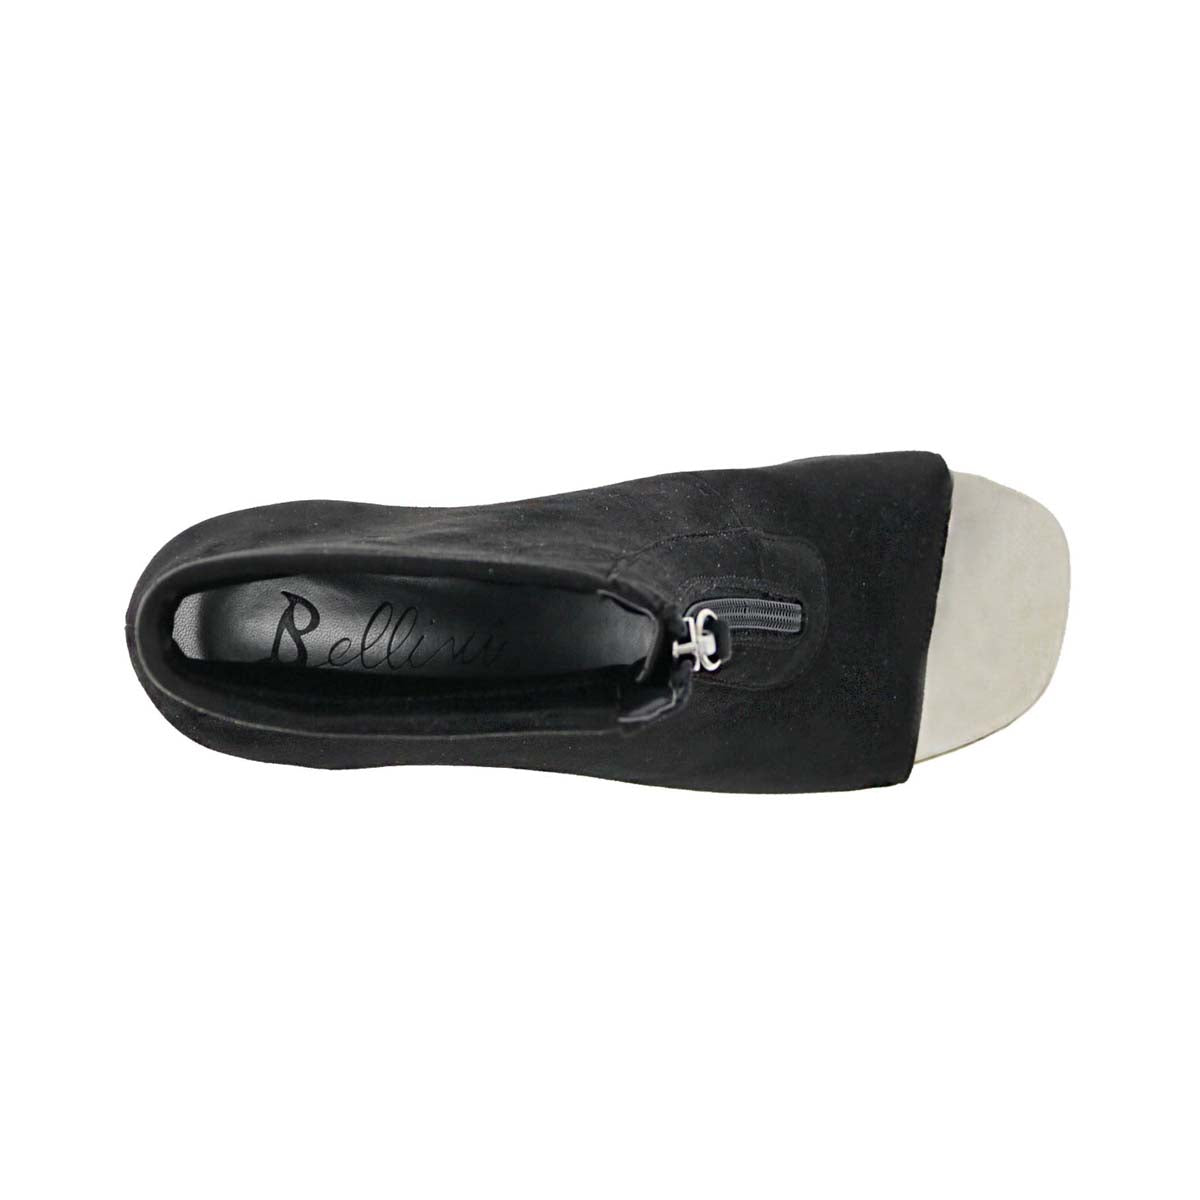 BELLINI JADED WOMEN OPEN-TOED ANKLE BOOTIES IN BLACK MICROSUEDE - TLW Shoes